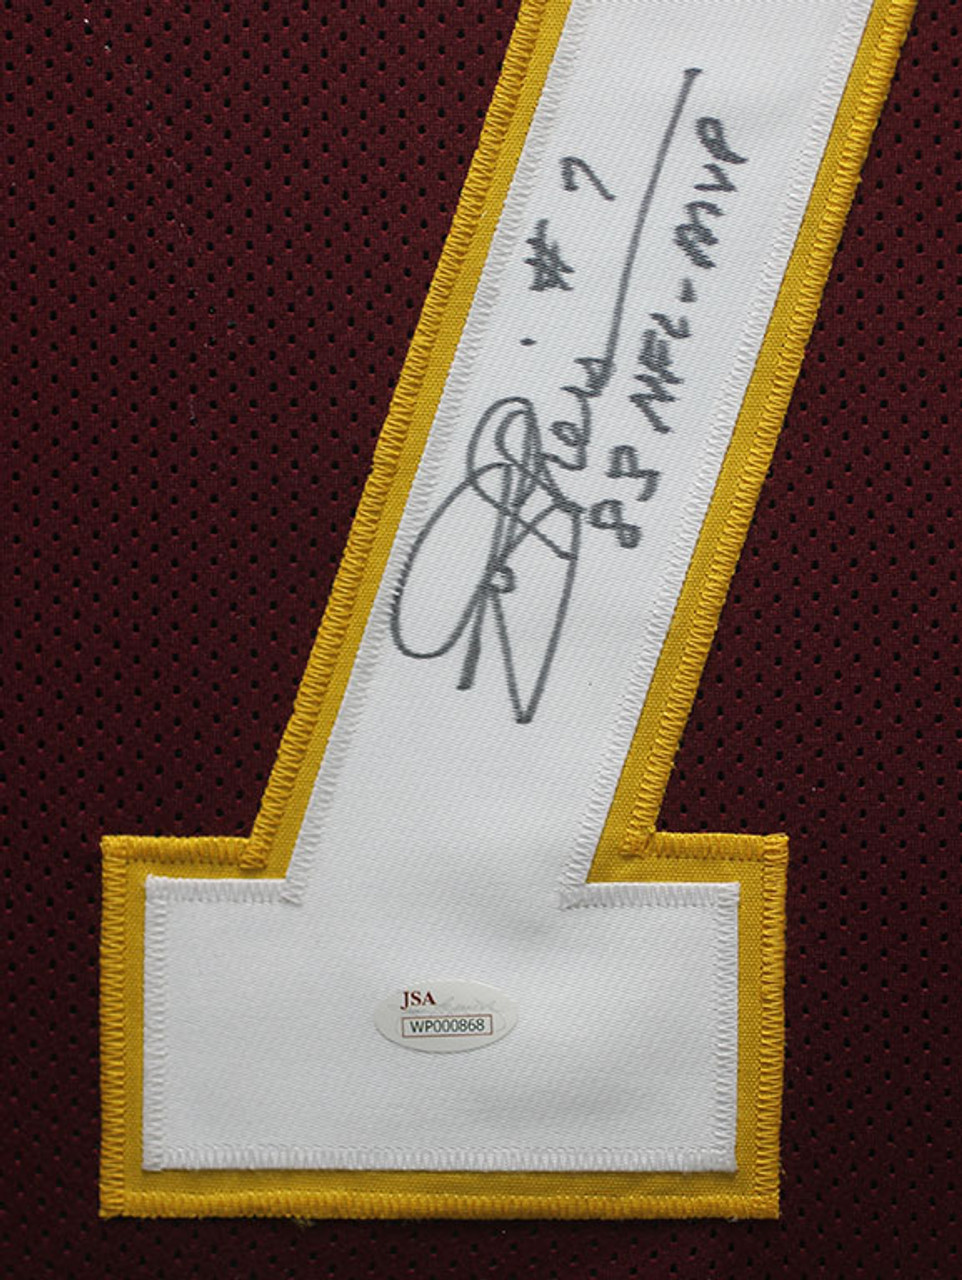 Pat Maroon autographed signed inscribed jersey Tampa Bay Lightning JSA COA